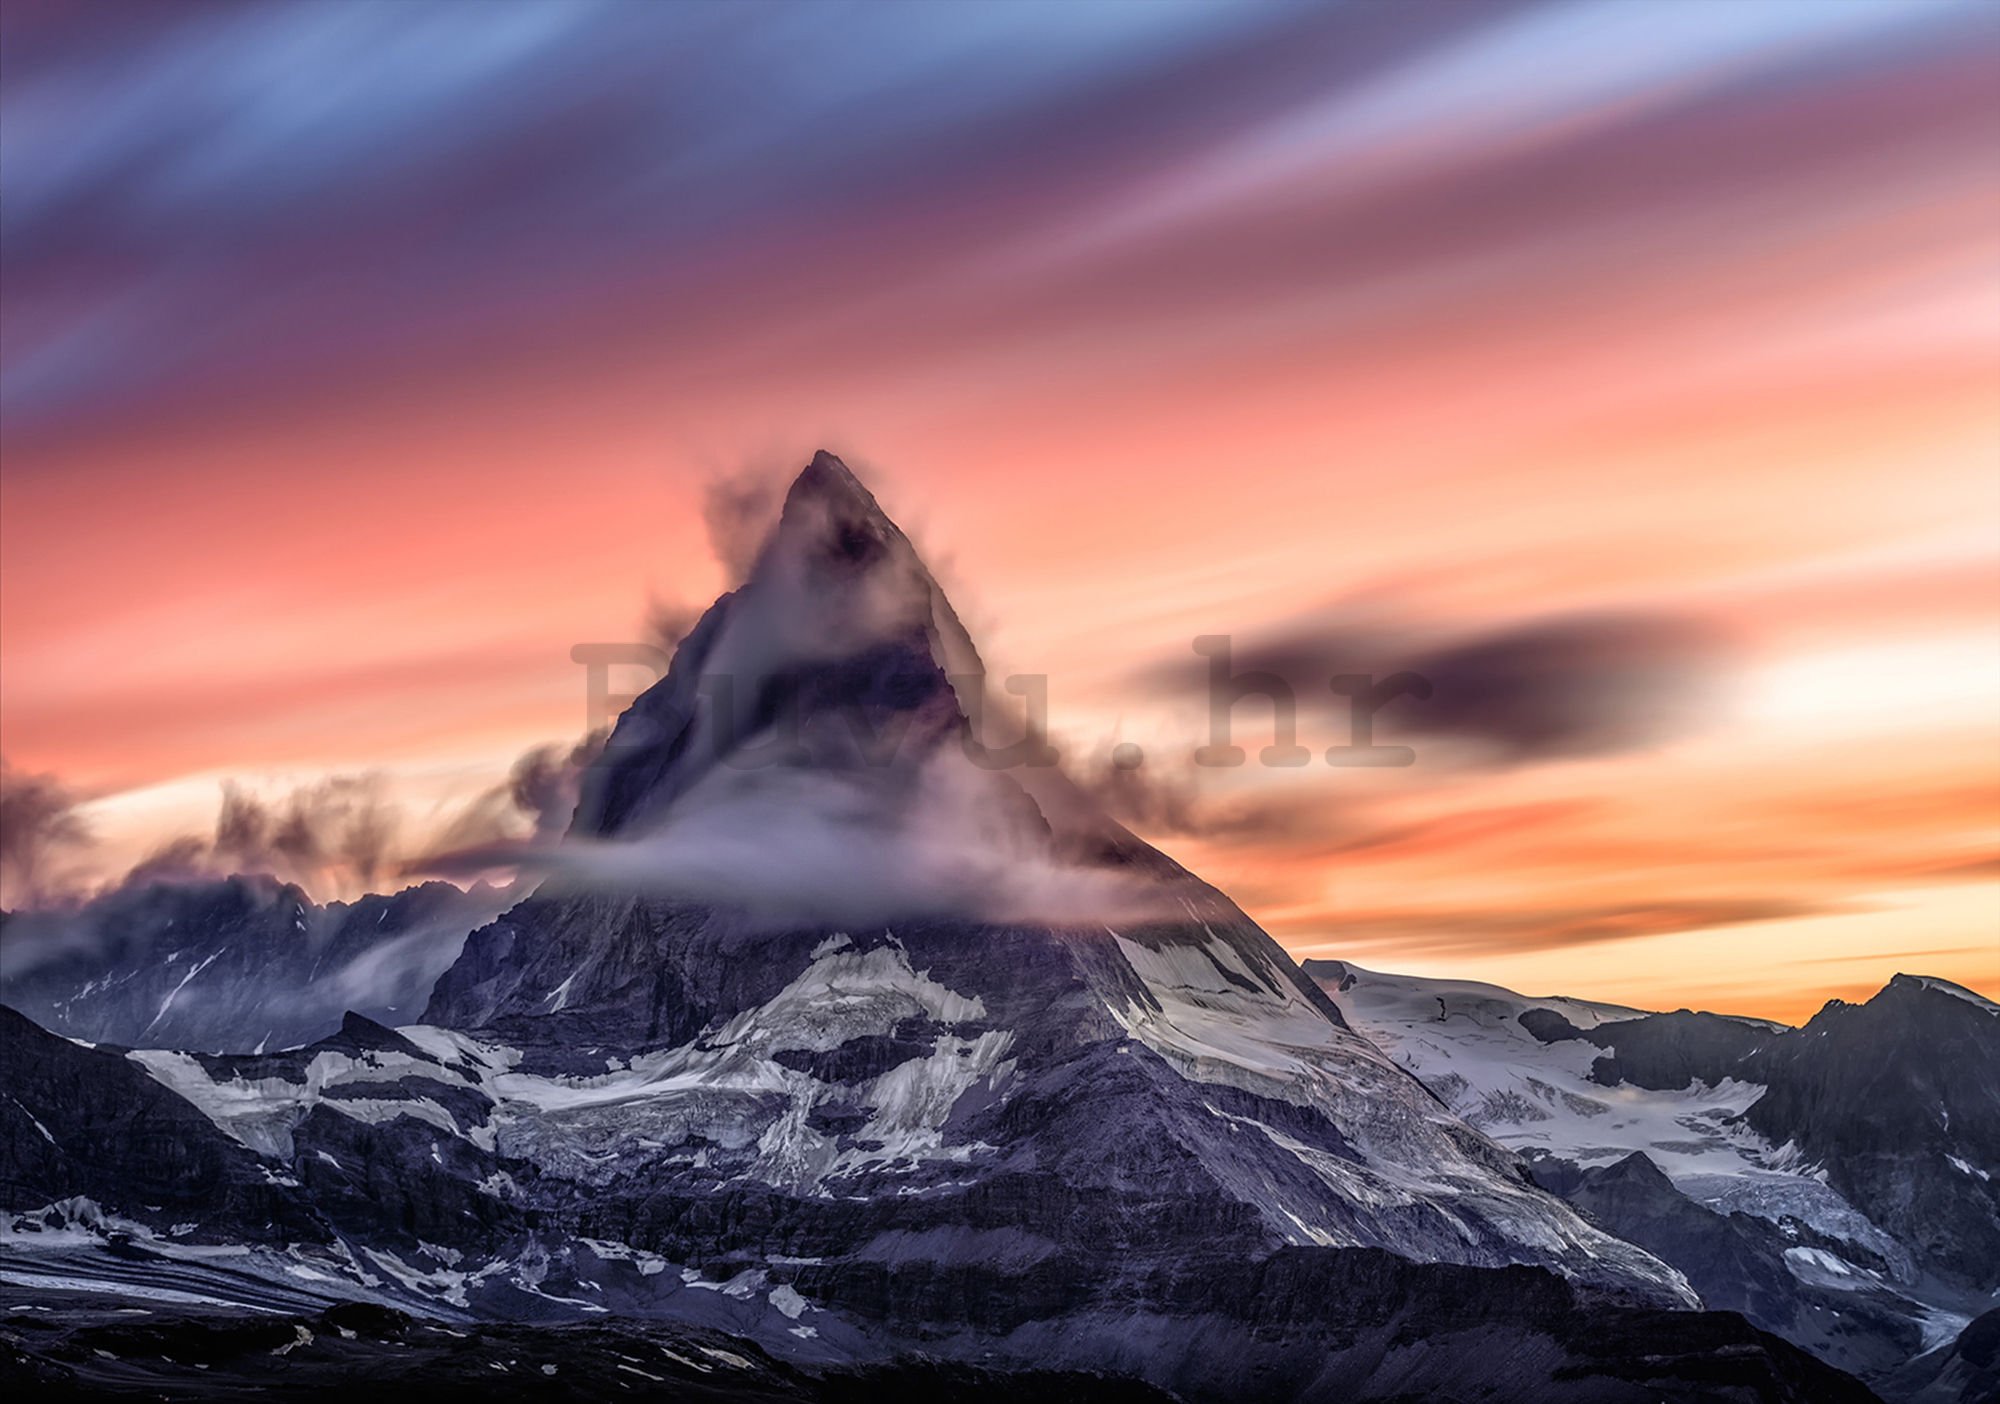 Foto tapeta: Matterhorn (1) - 254x368 cm